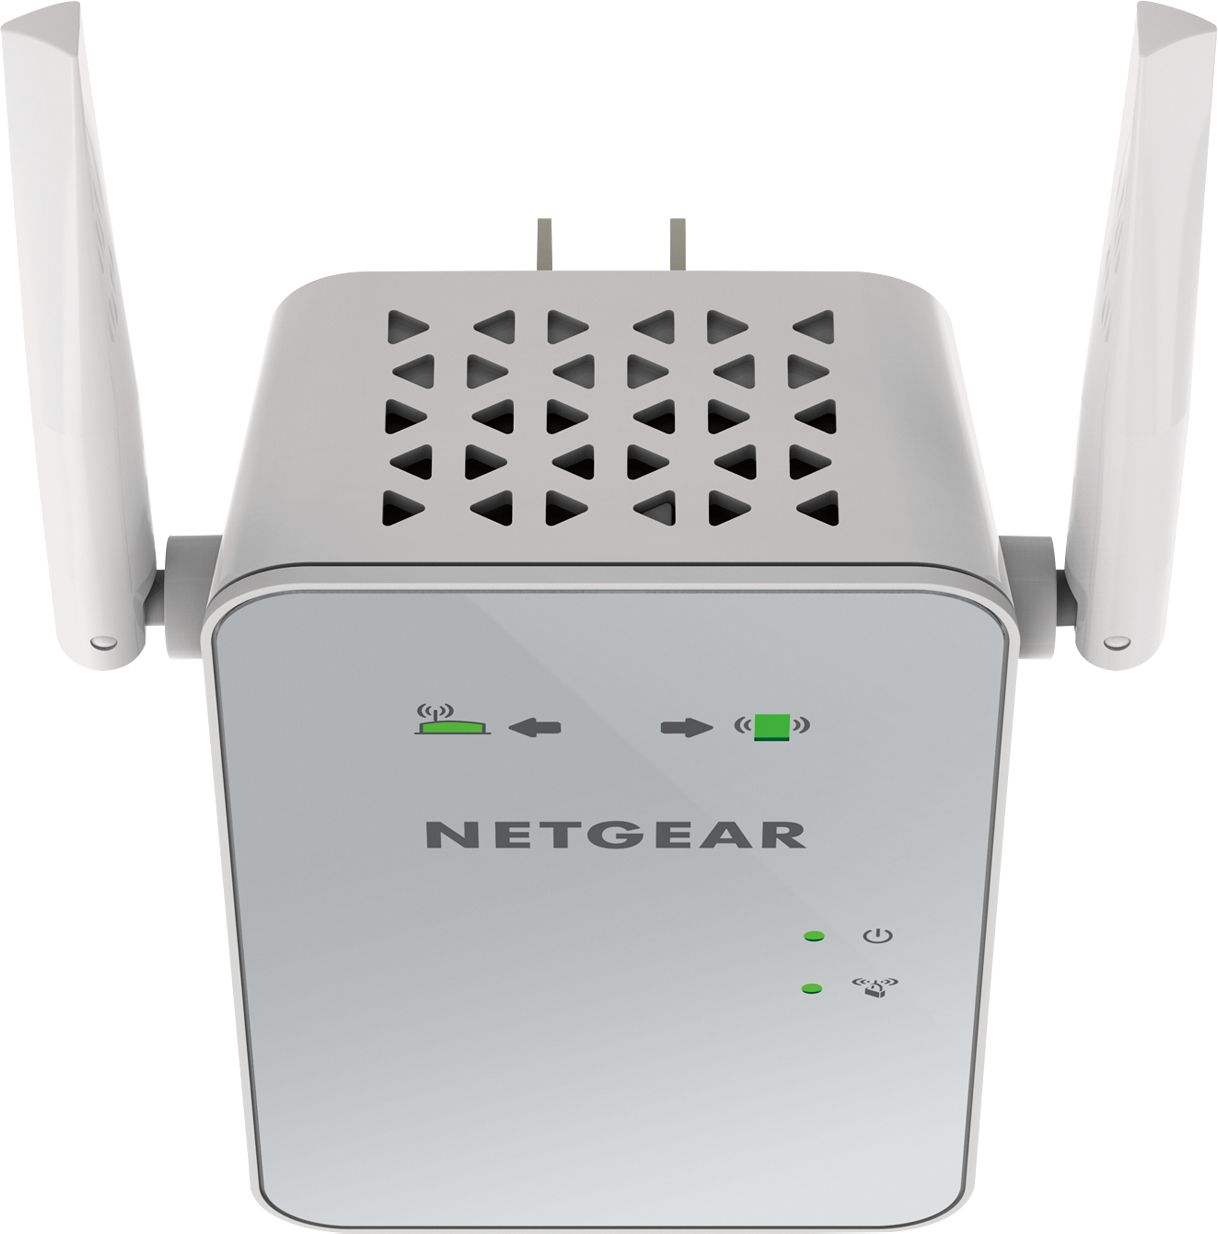 Netgear - AC1200 Dual-Band Wi-Fi Range Extender - White